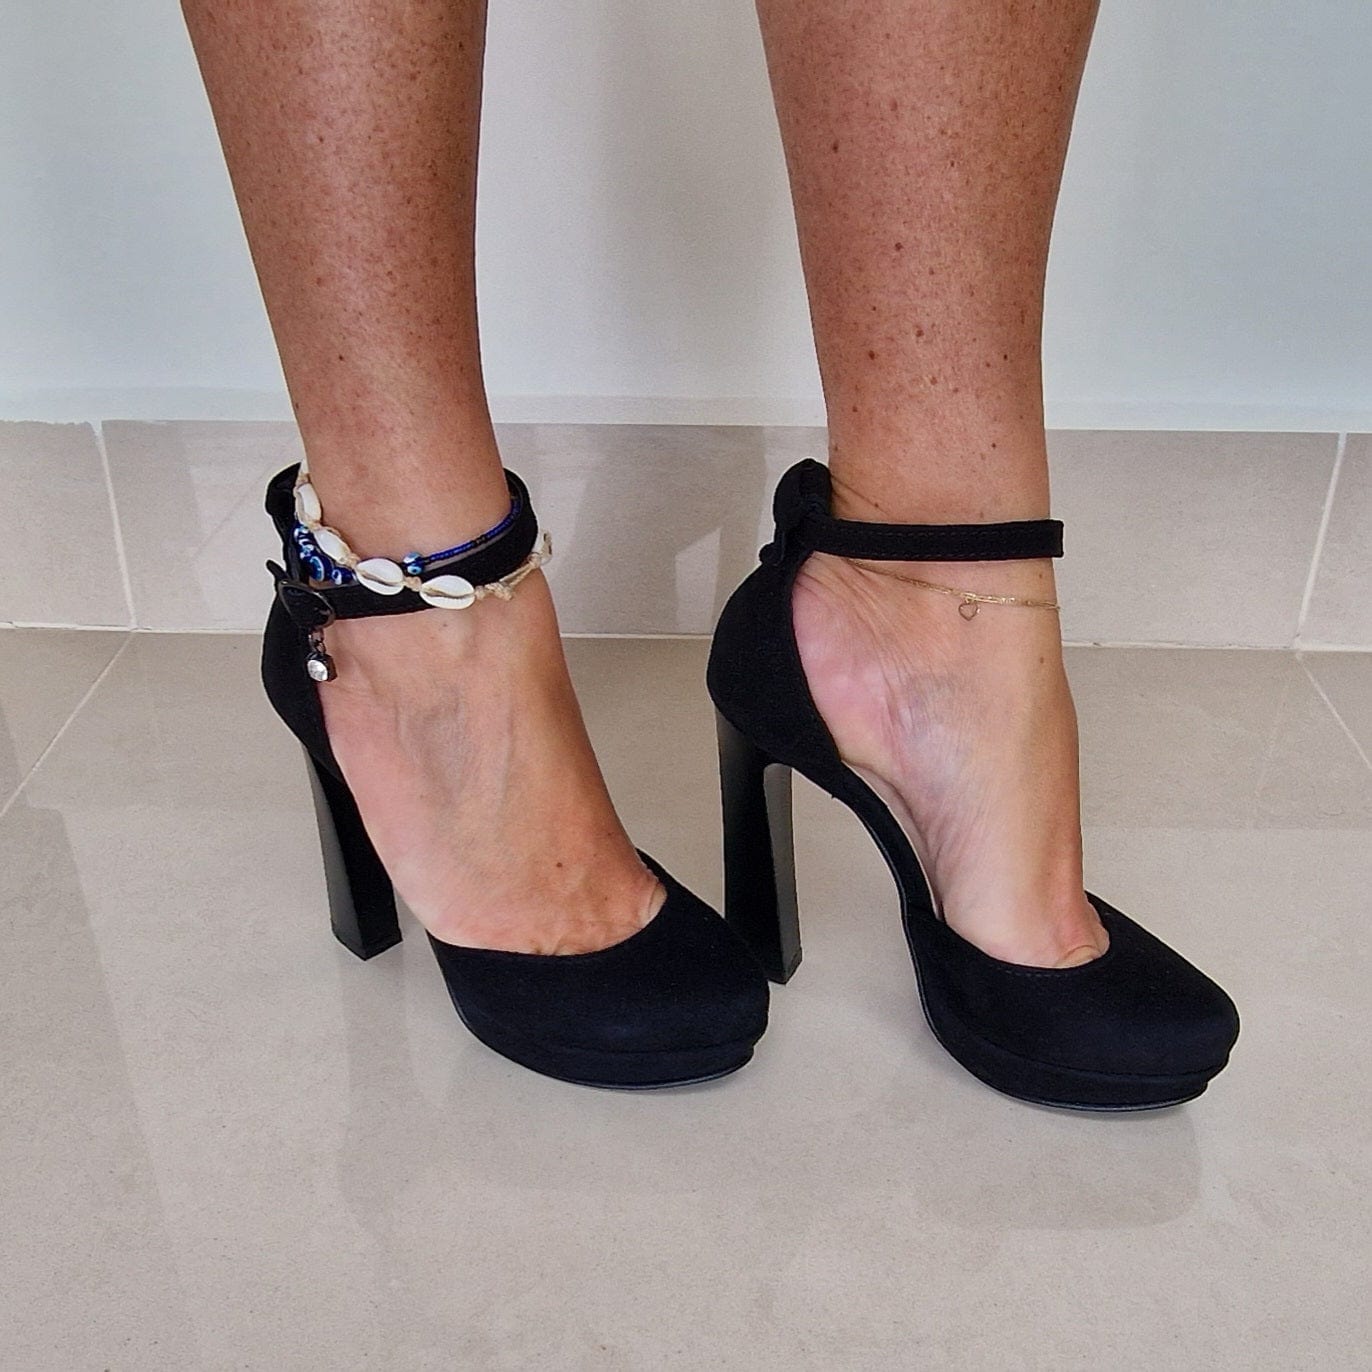 Almond toe high heeled platform shoes in black suede